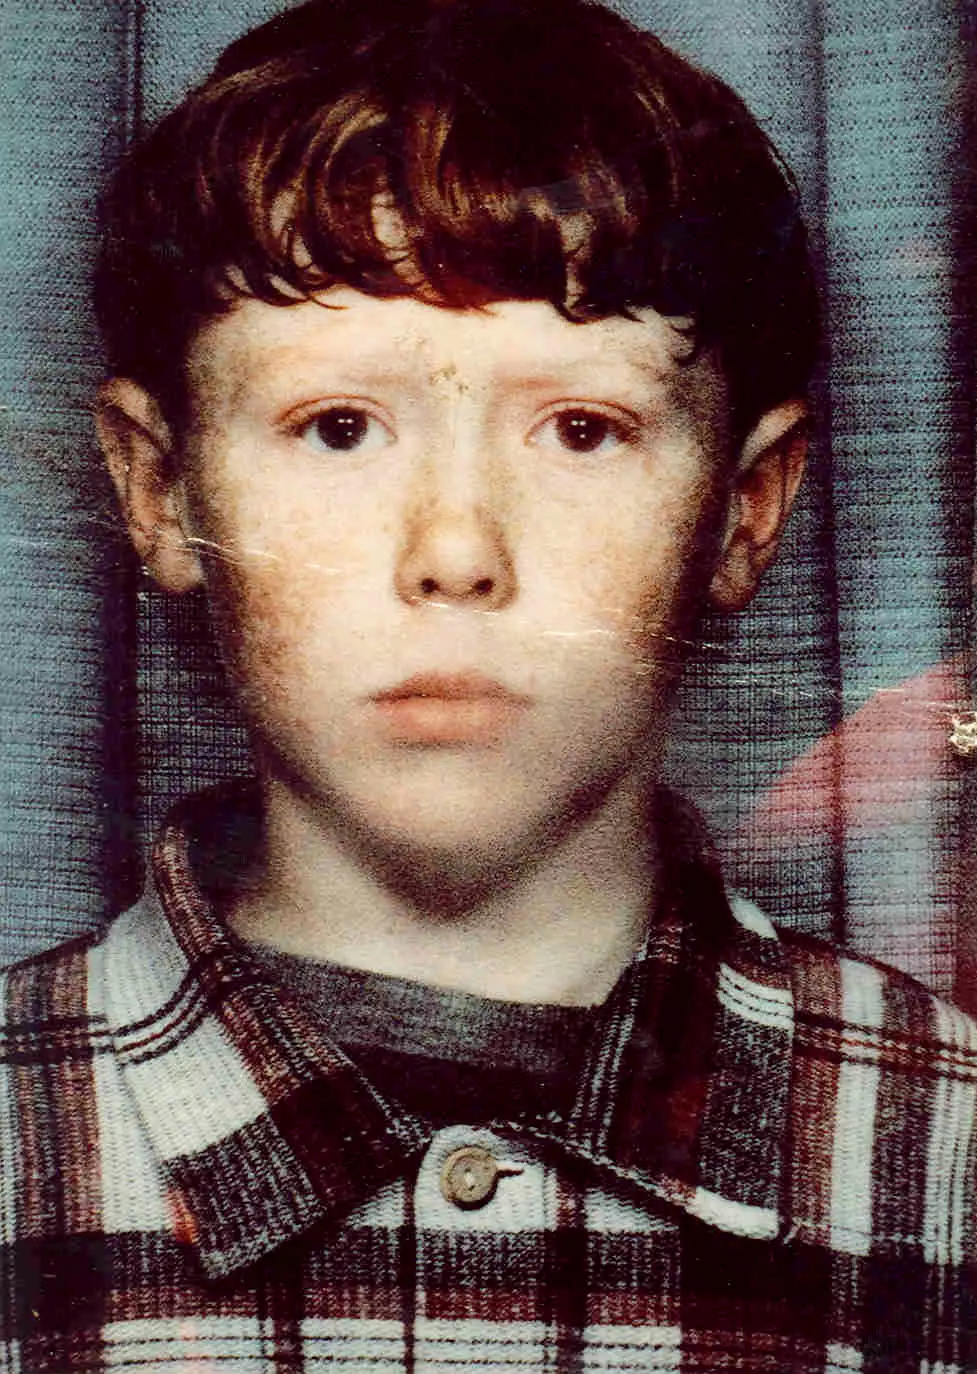 David Spencer went missing in 1996.